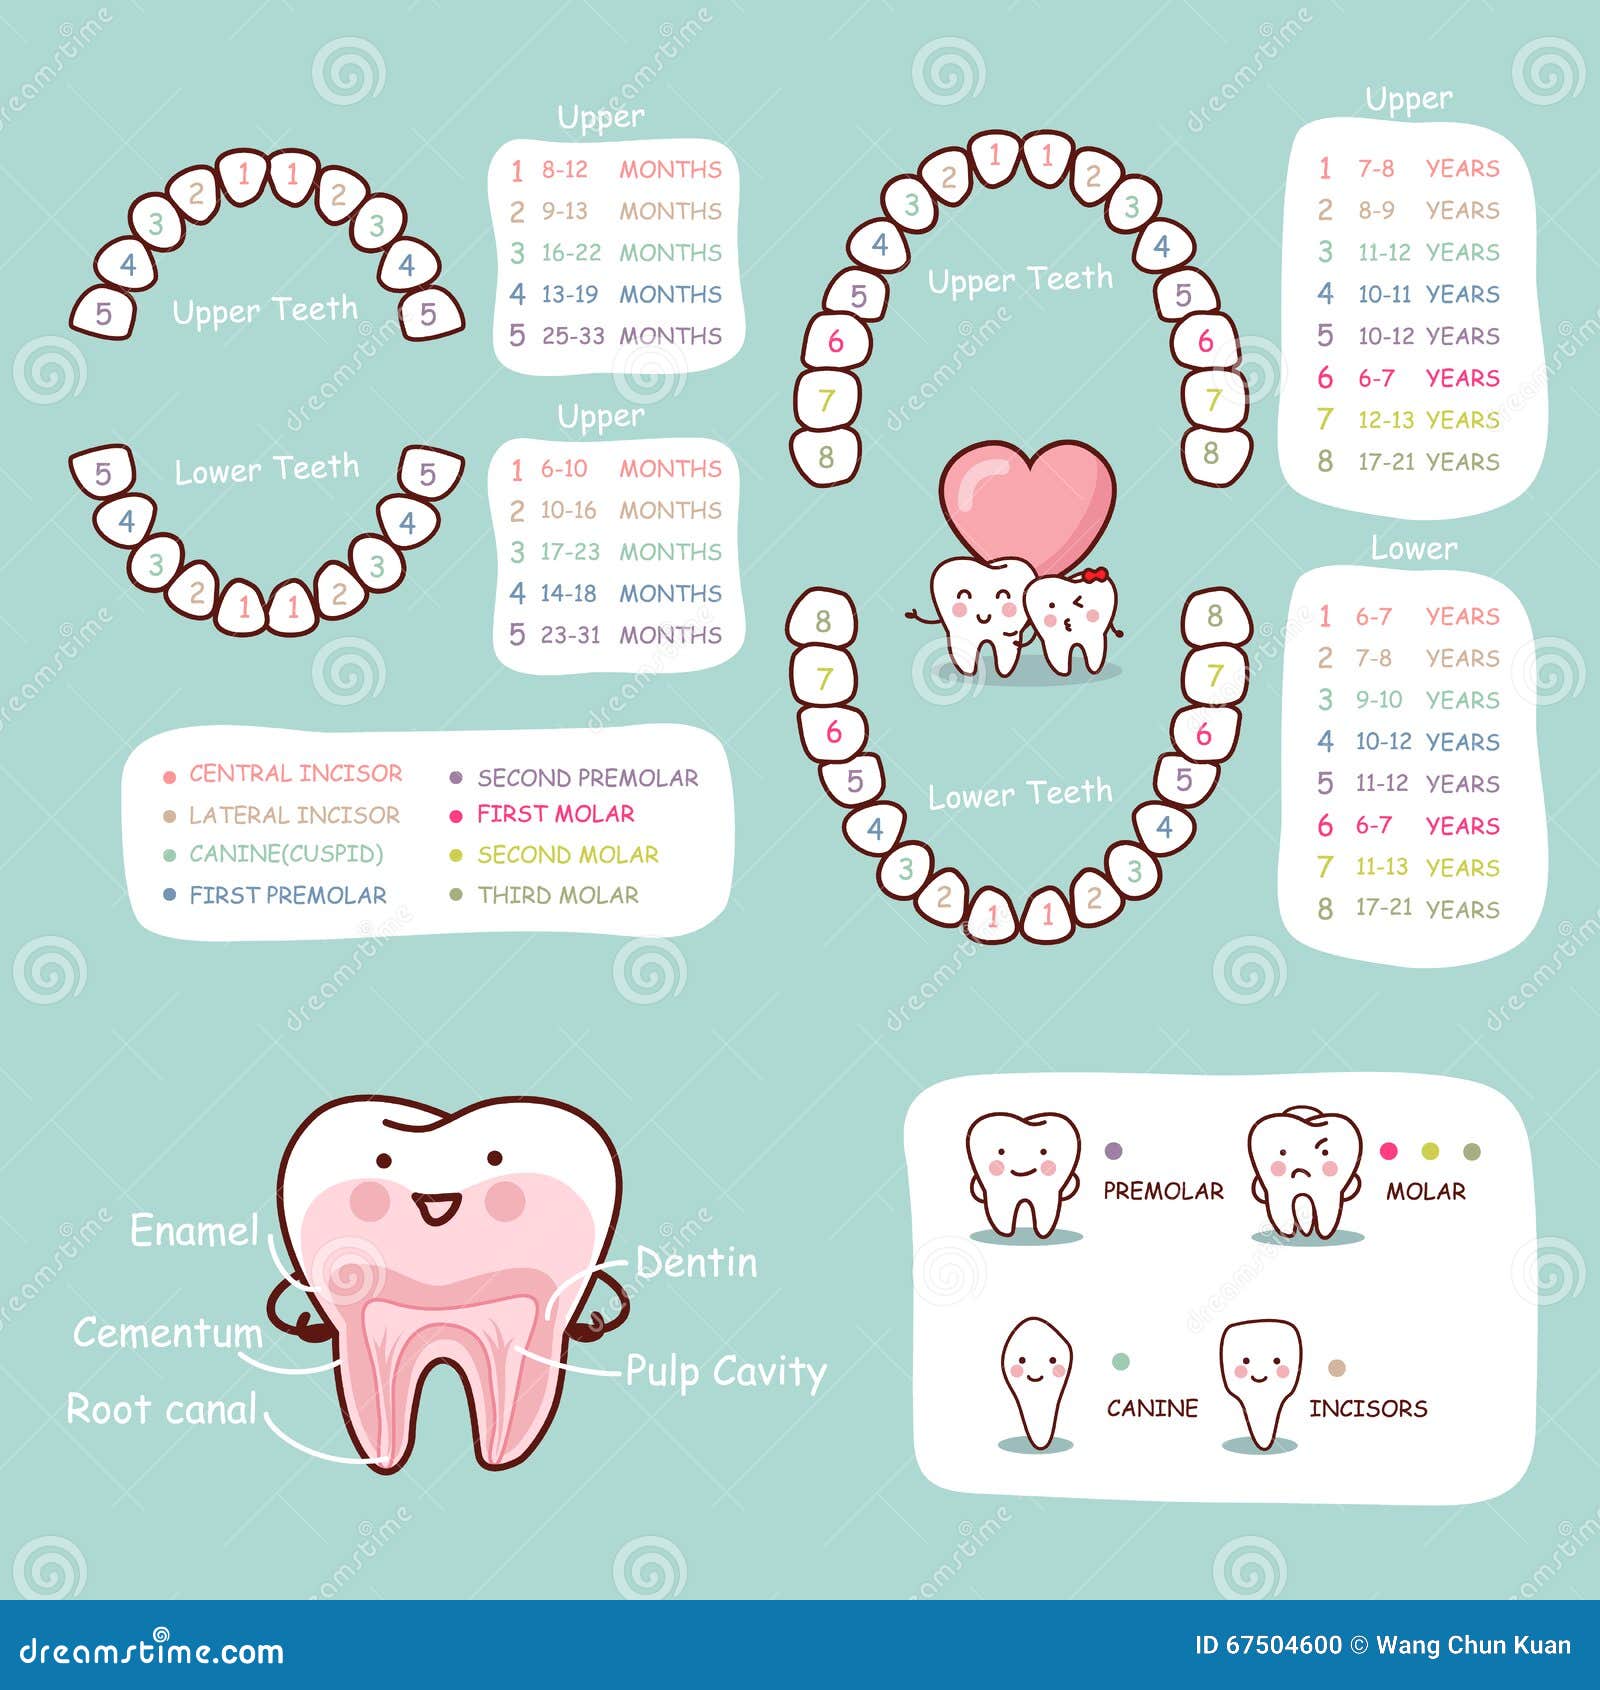 Human Tooth Anatomy Infographic Diagram Vector Illustration